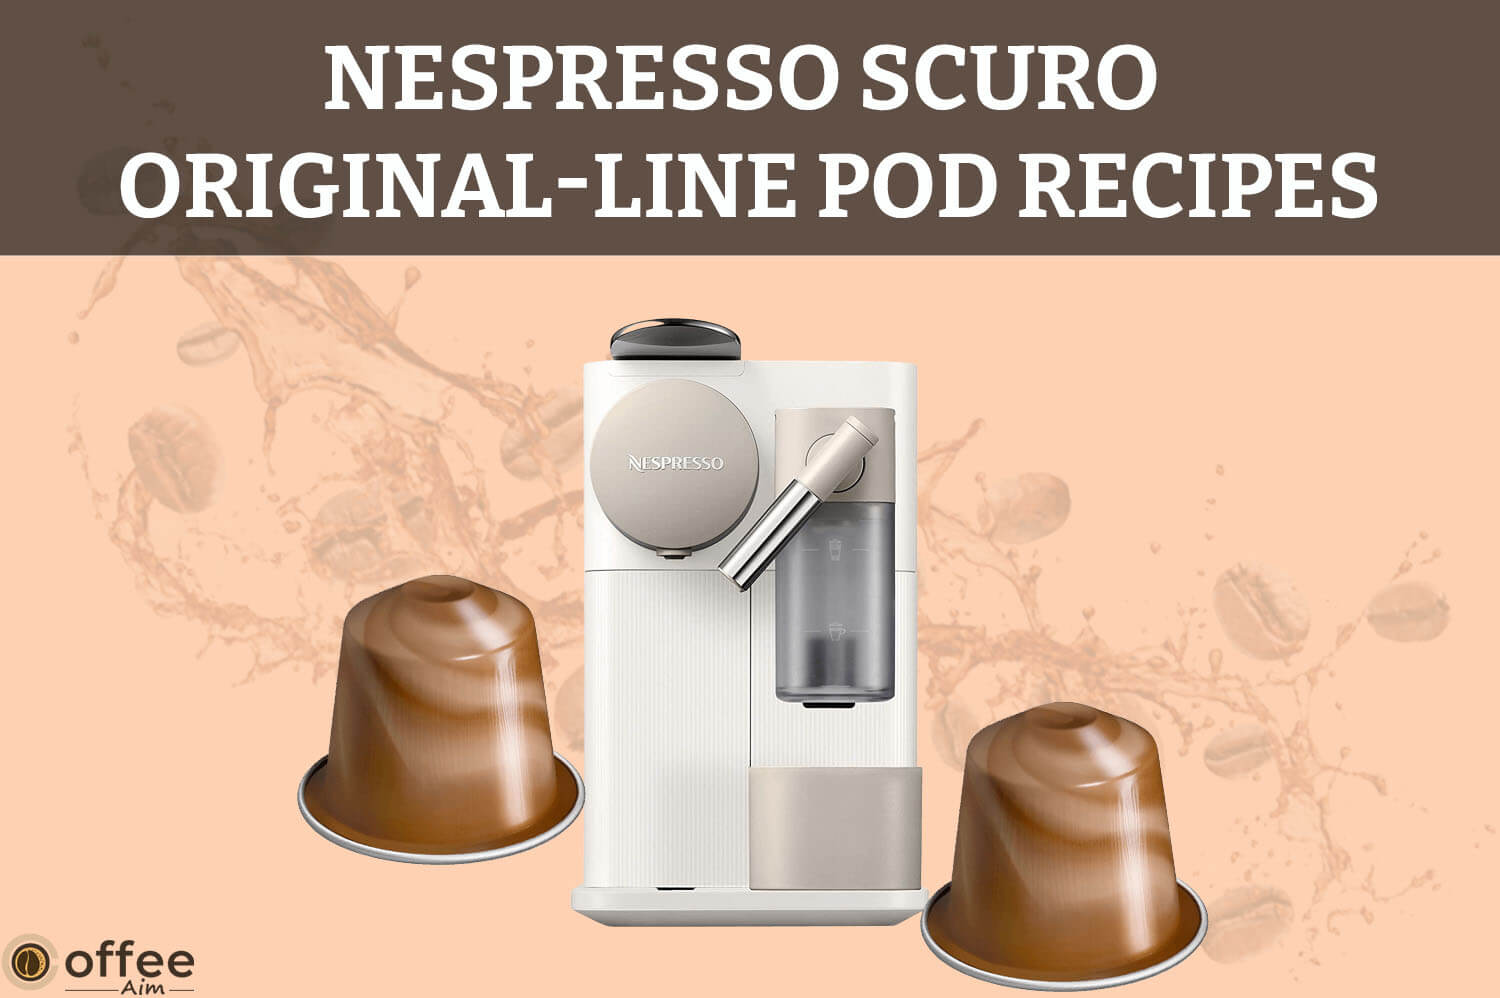 Featured image for the article "Nespresso Scuro Original-Line Pod Recipes"